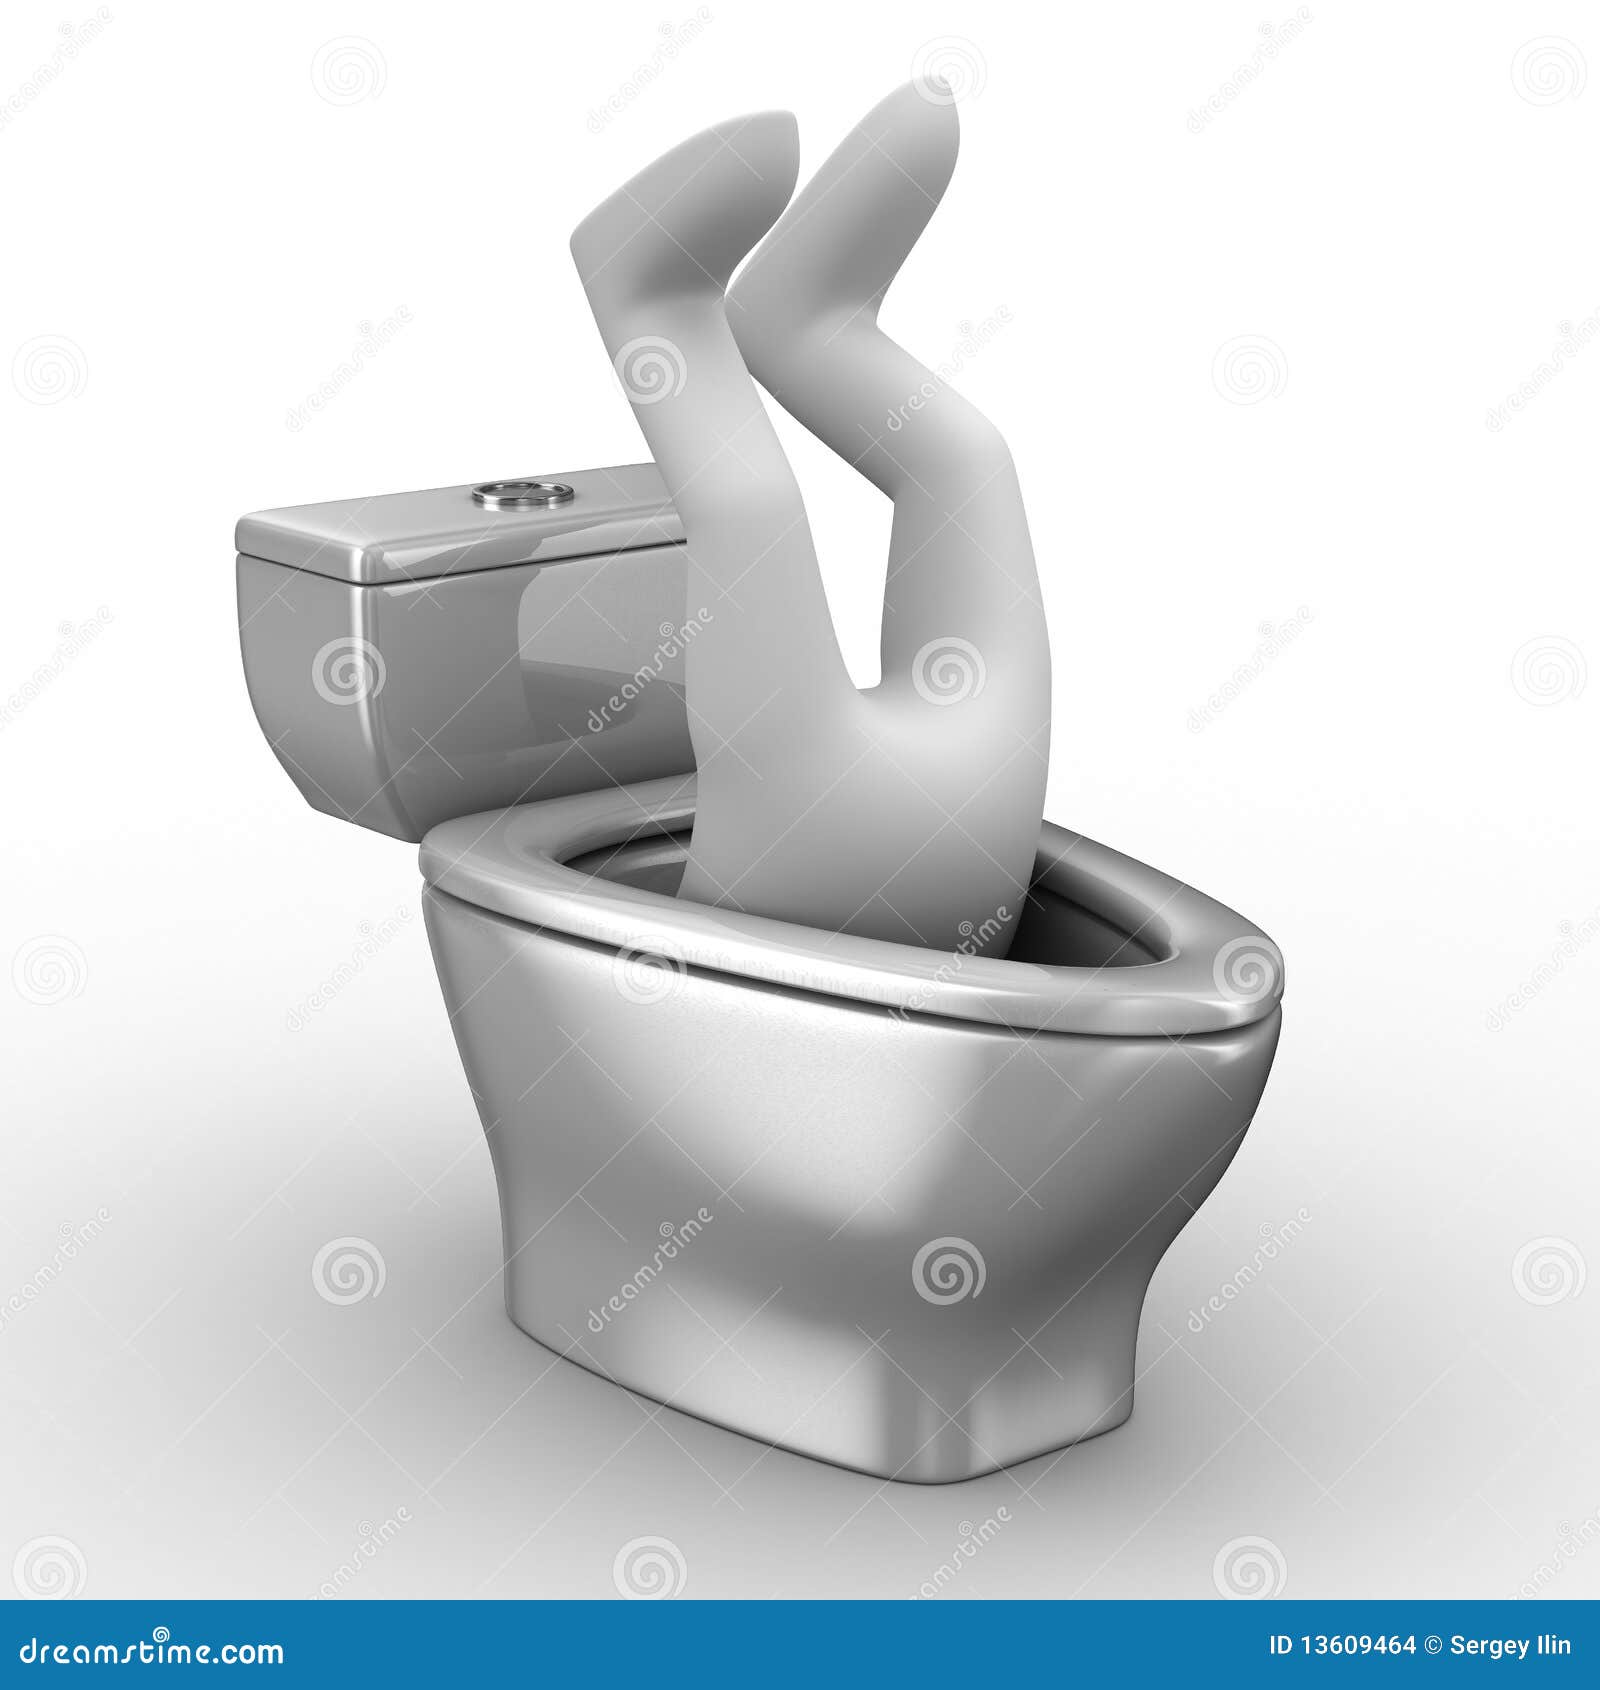 clipart toilet bowl - photo #45